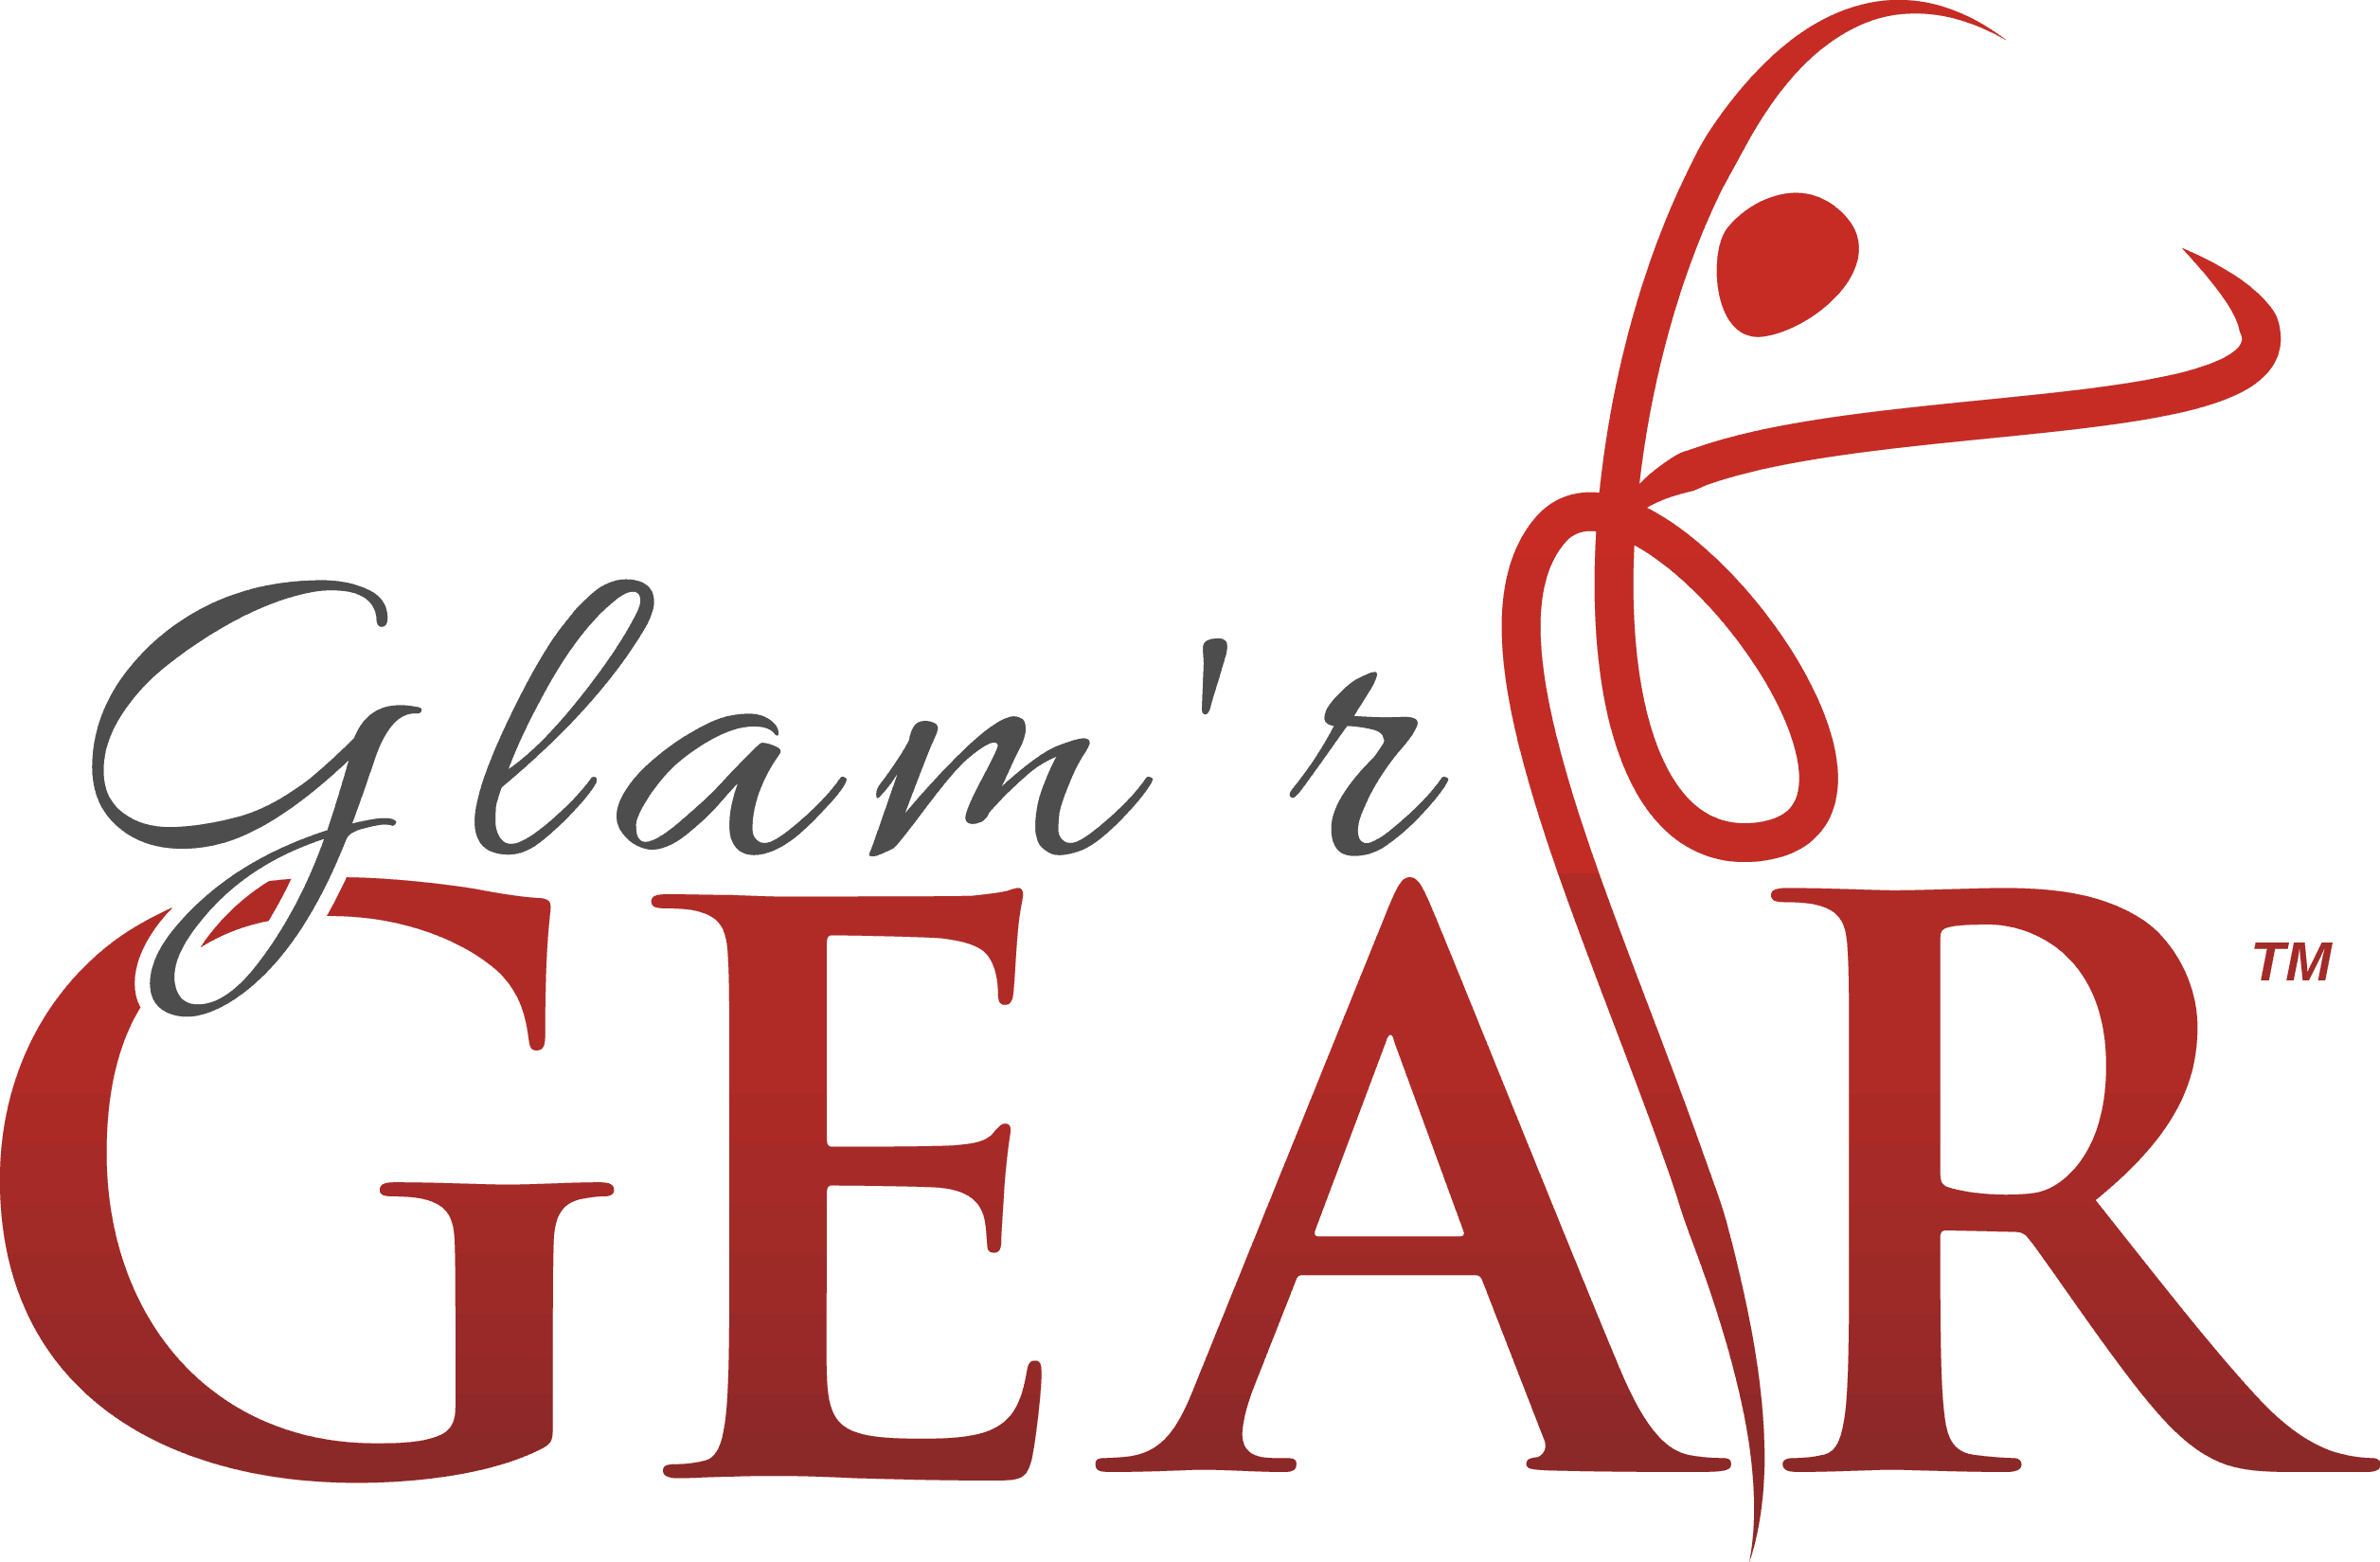 https://ideadance.org/members/wp-content/uploads/2017/10/Glamr-Gear.png